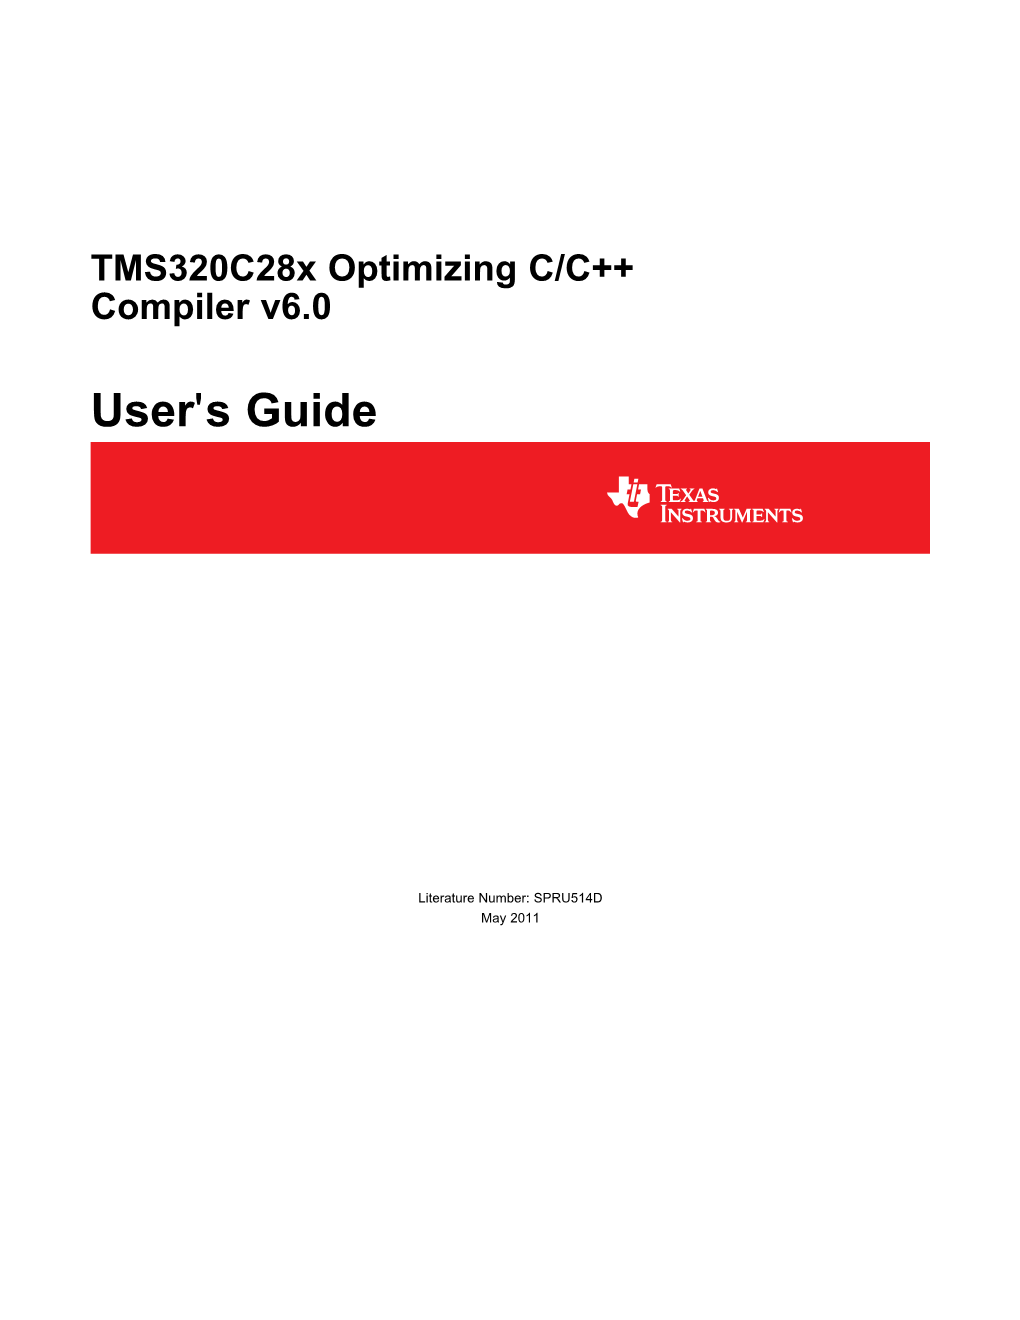 Tms320c28x Optimizing C/C++ Compiler V6.0 User's Guide (Rev. D)